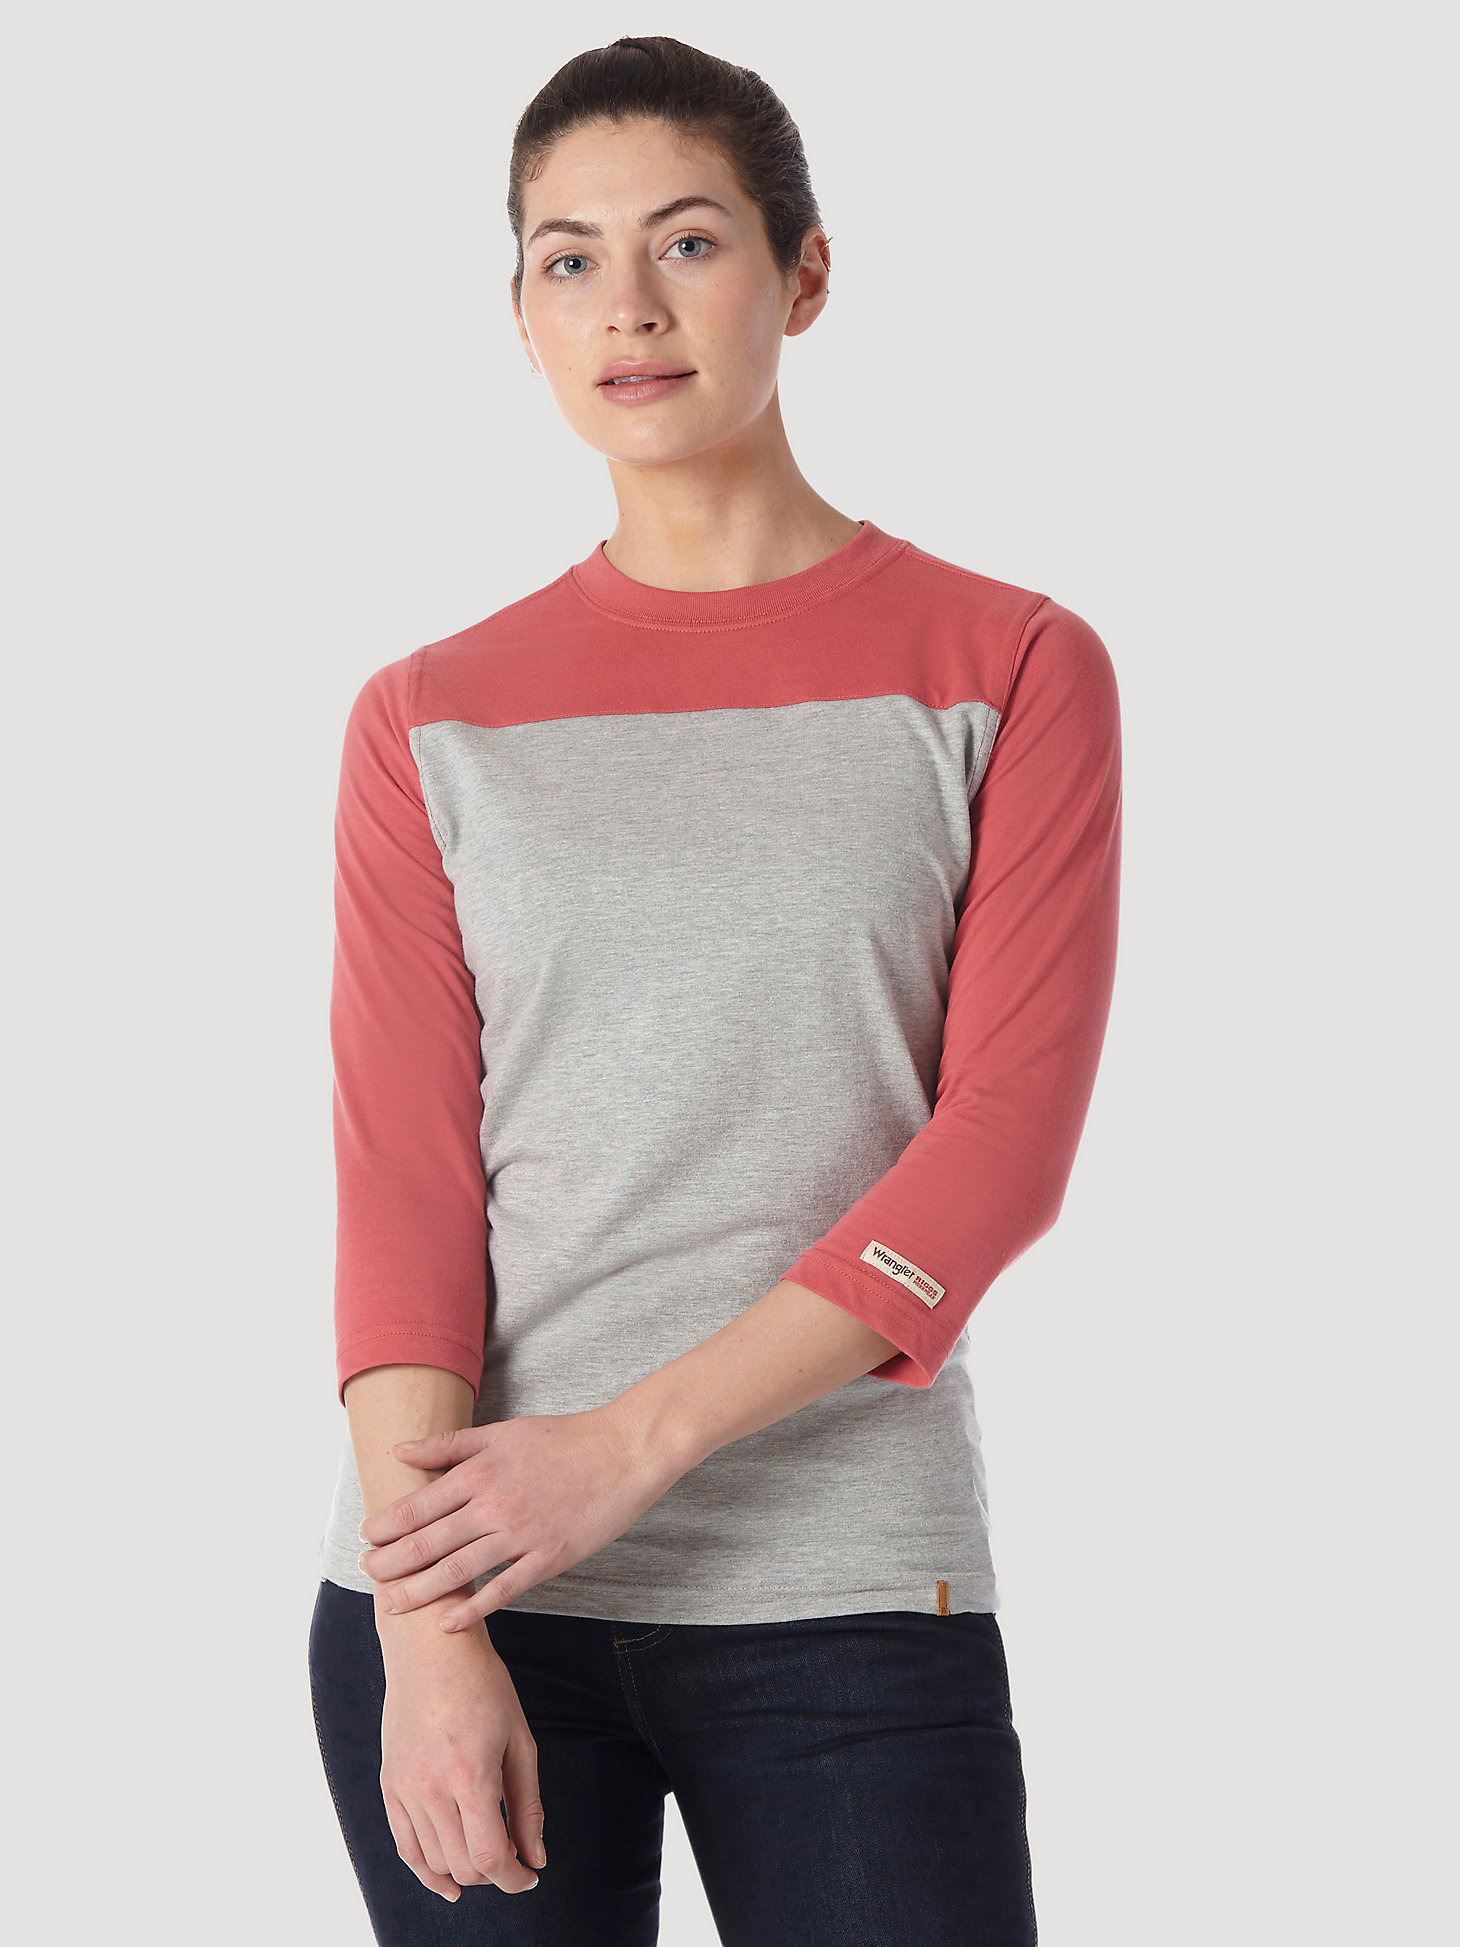 Wrangler Riggs Workwear Womens 3/4 Sleeve Performance T-Shirt